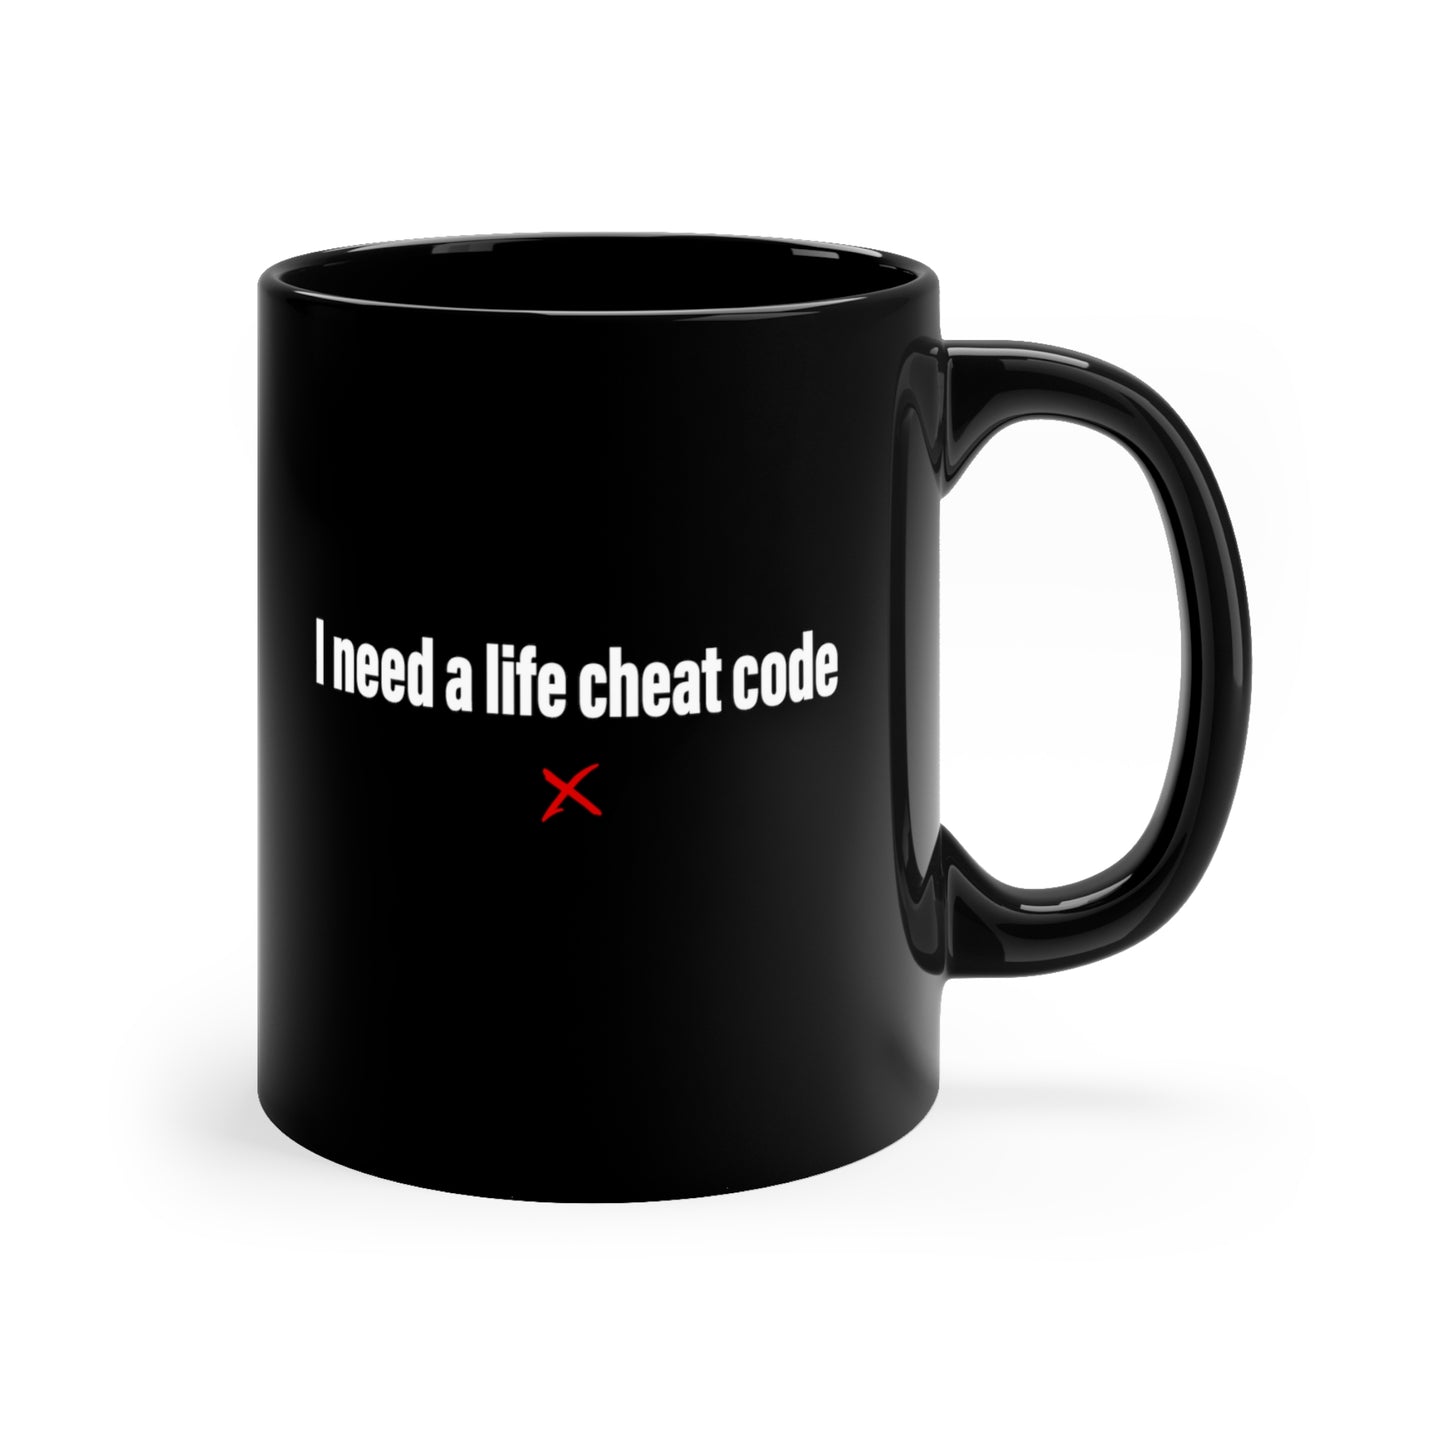 I need a life cheat code - Mug